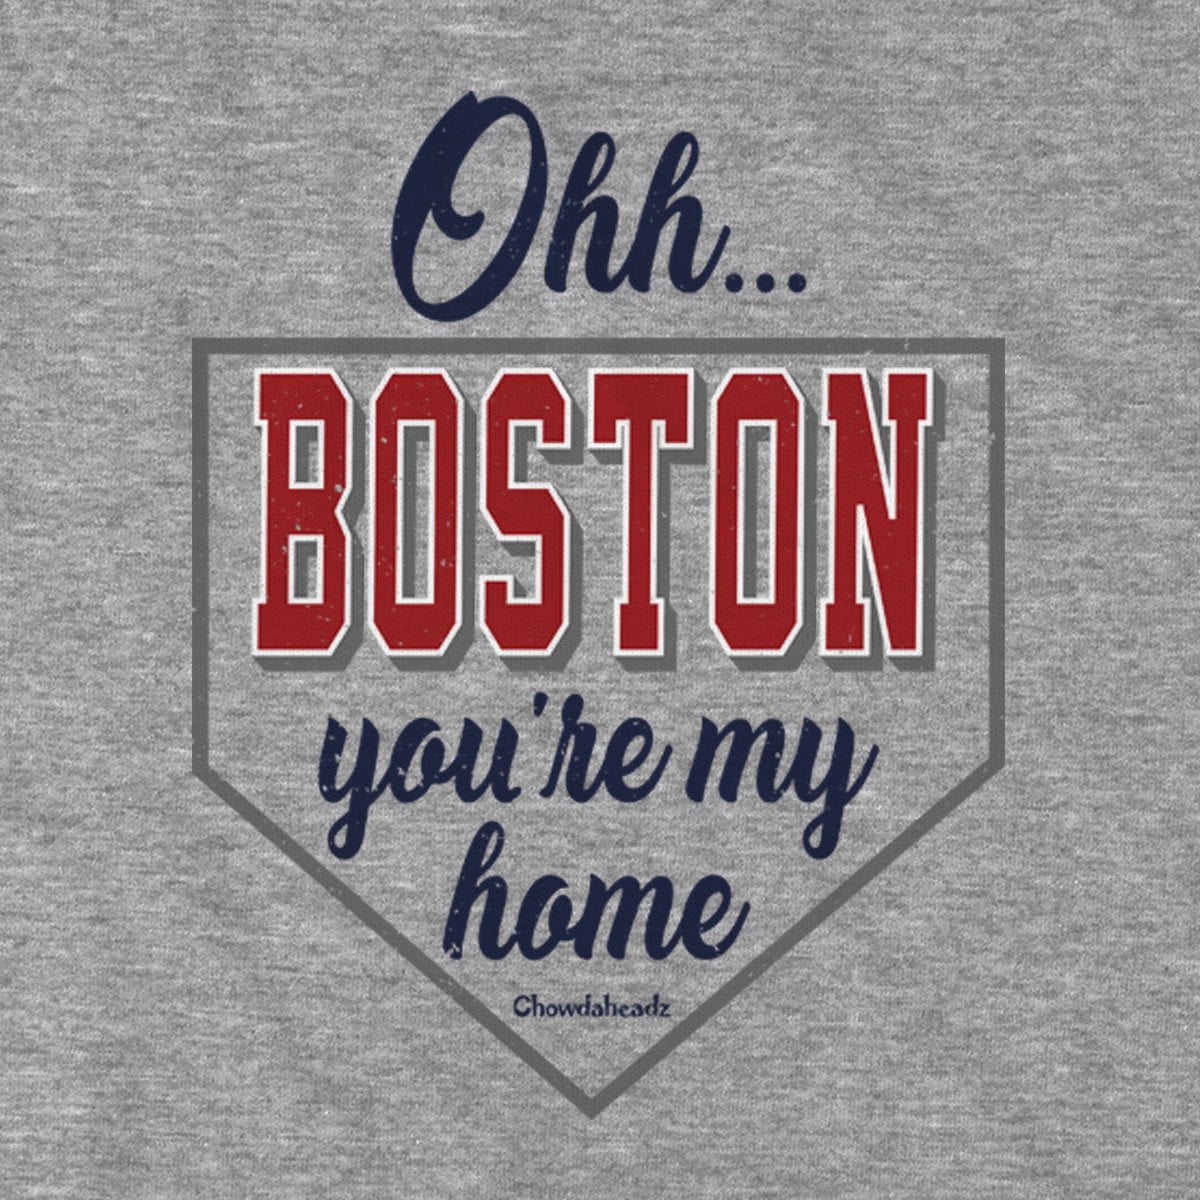 Ohh Boston You're My Home T-Shirt - Chowdaheadz